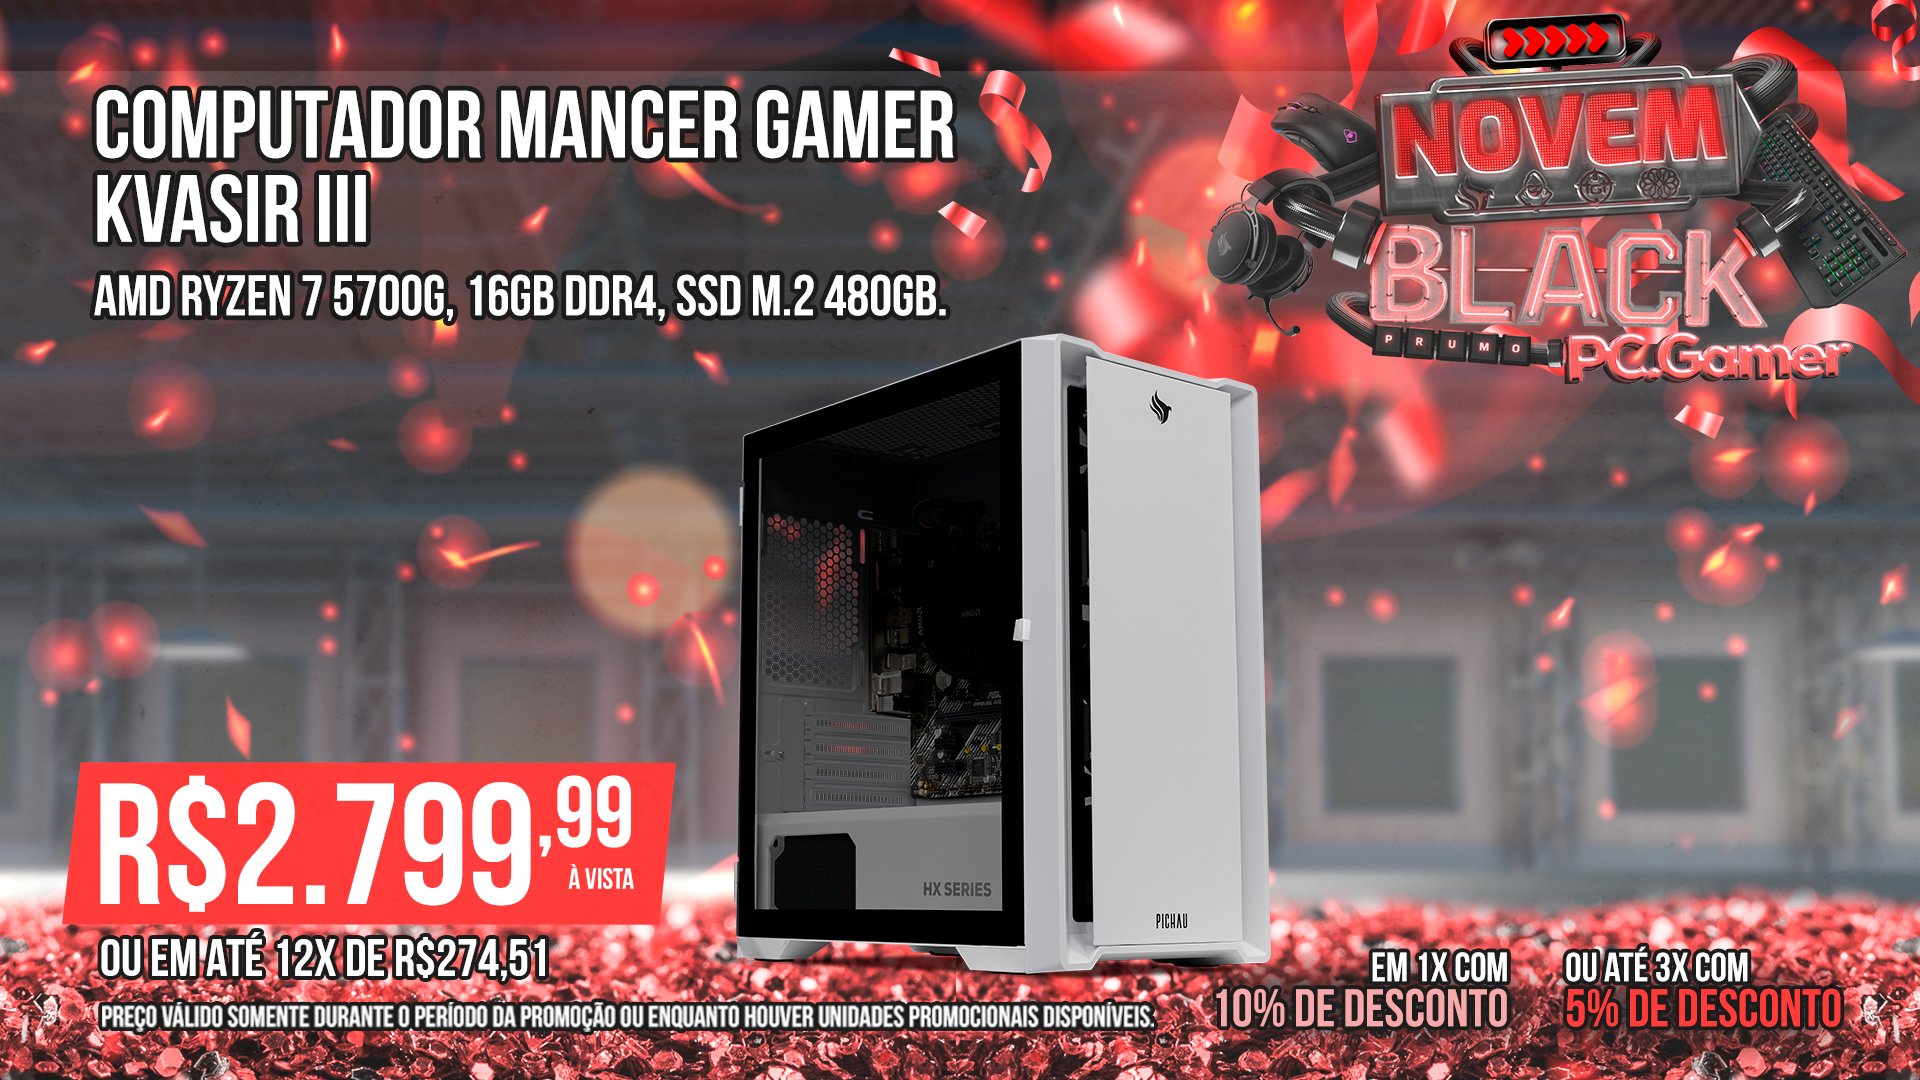 PC Mancer Gamer Kvasir III, AMD Ryzen 7 5700G, 16GB DDR4, SSD M.2